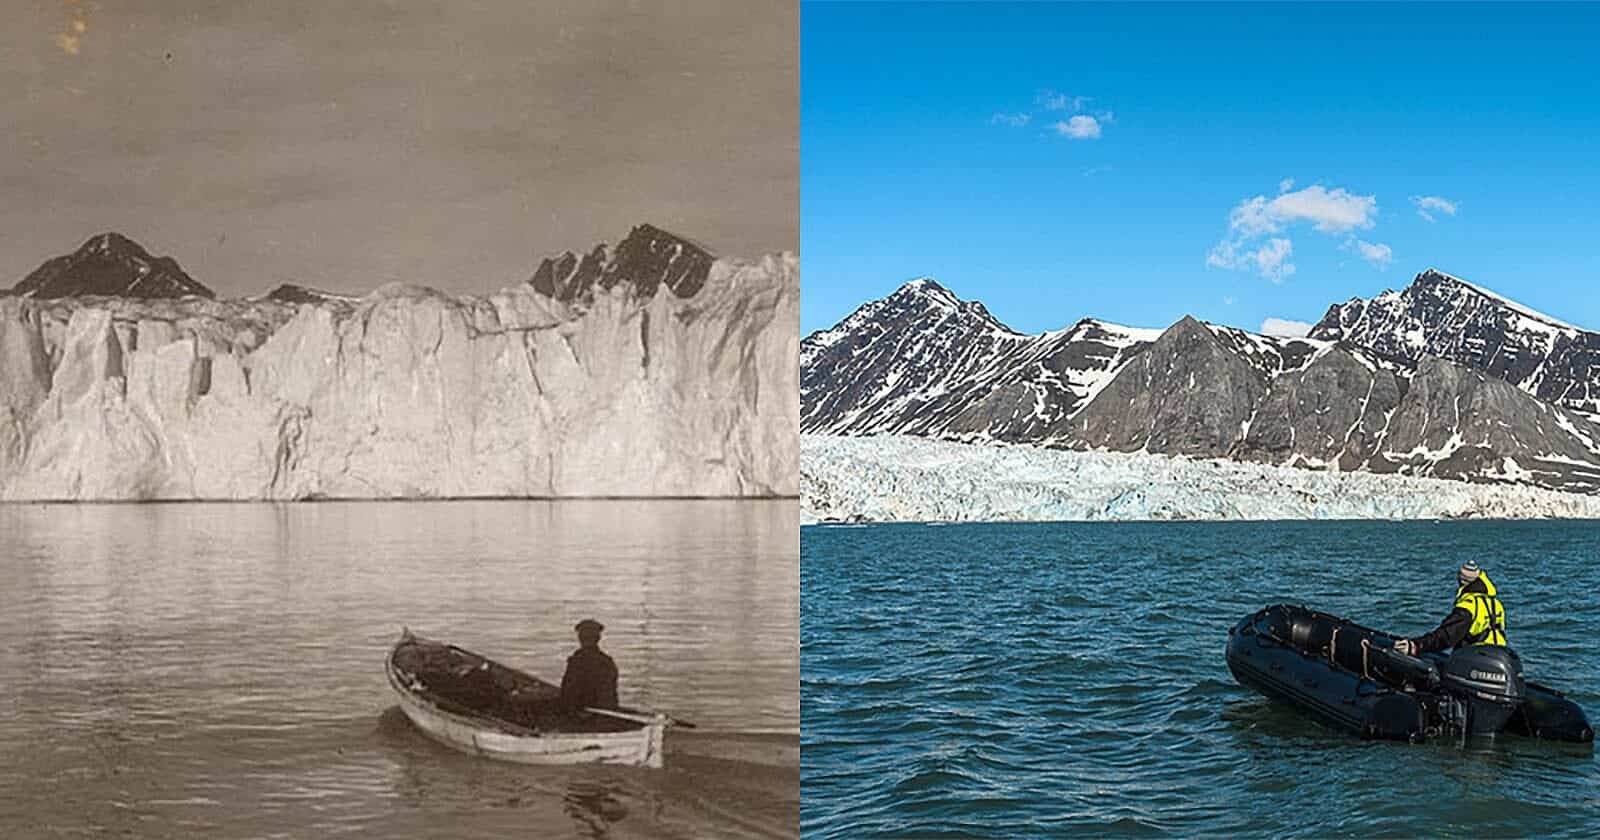    Retreat of Greenland's Glaciers